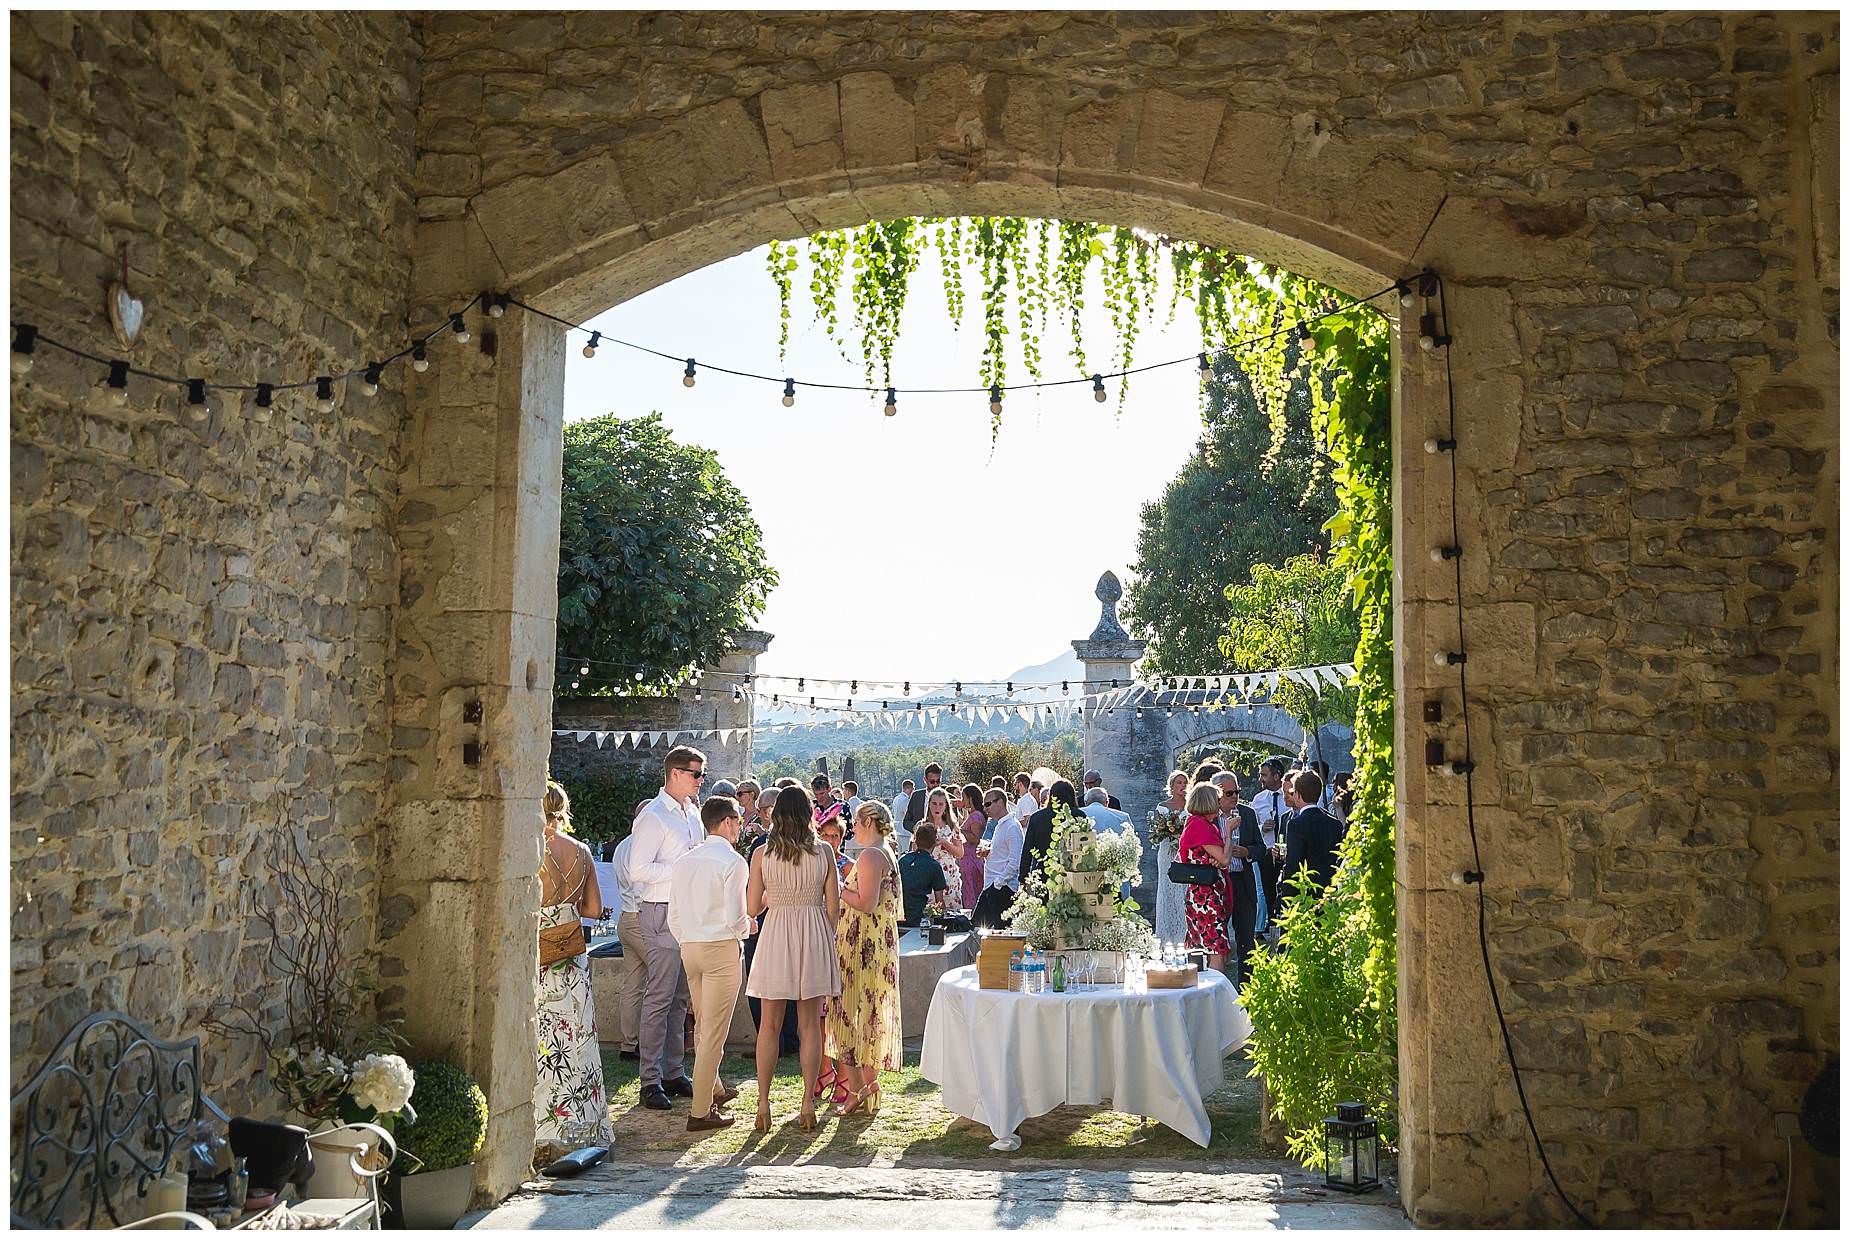 courtyard drinks Domain Saint Germain